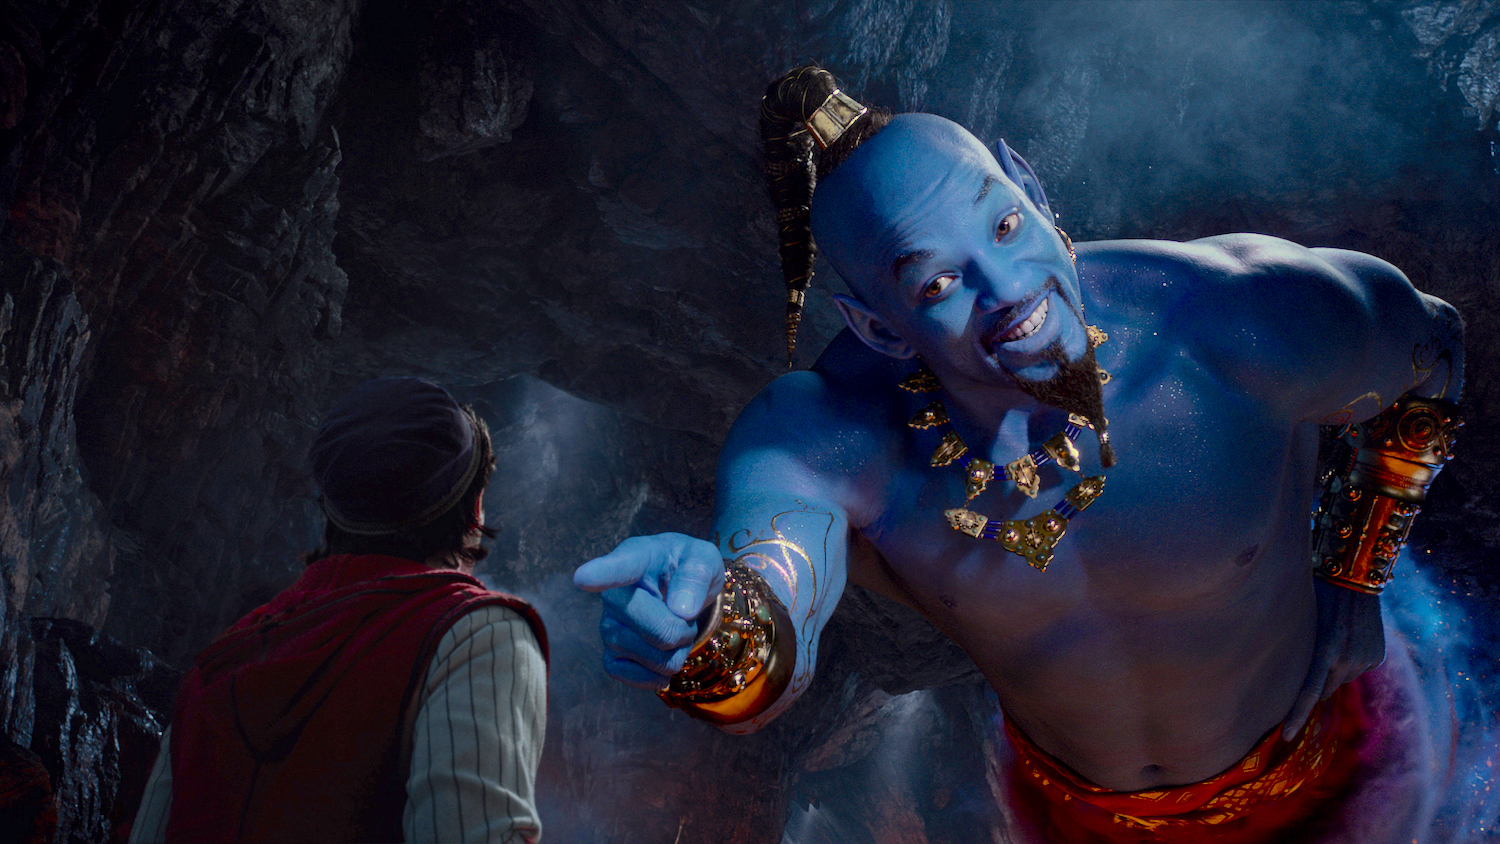 Watch Disney’s First Official ‘Aladdin’ Trailer!